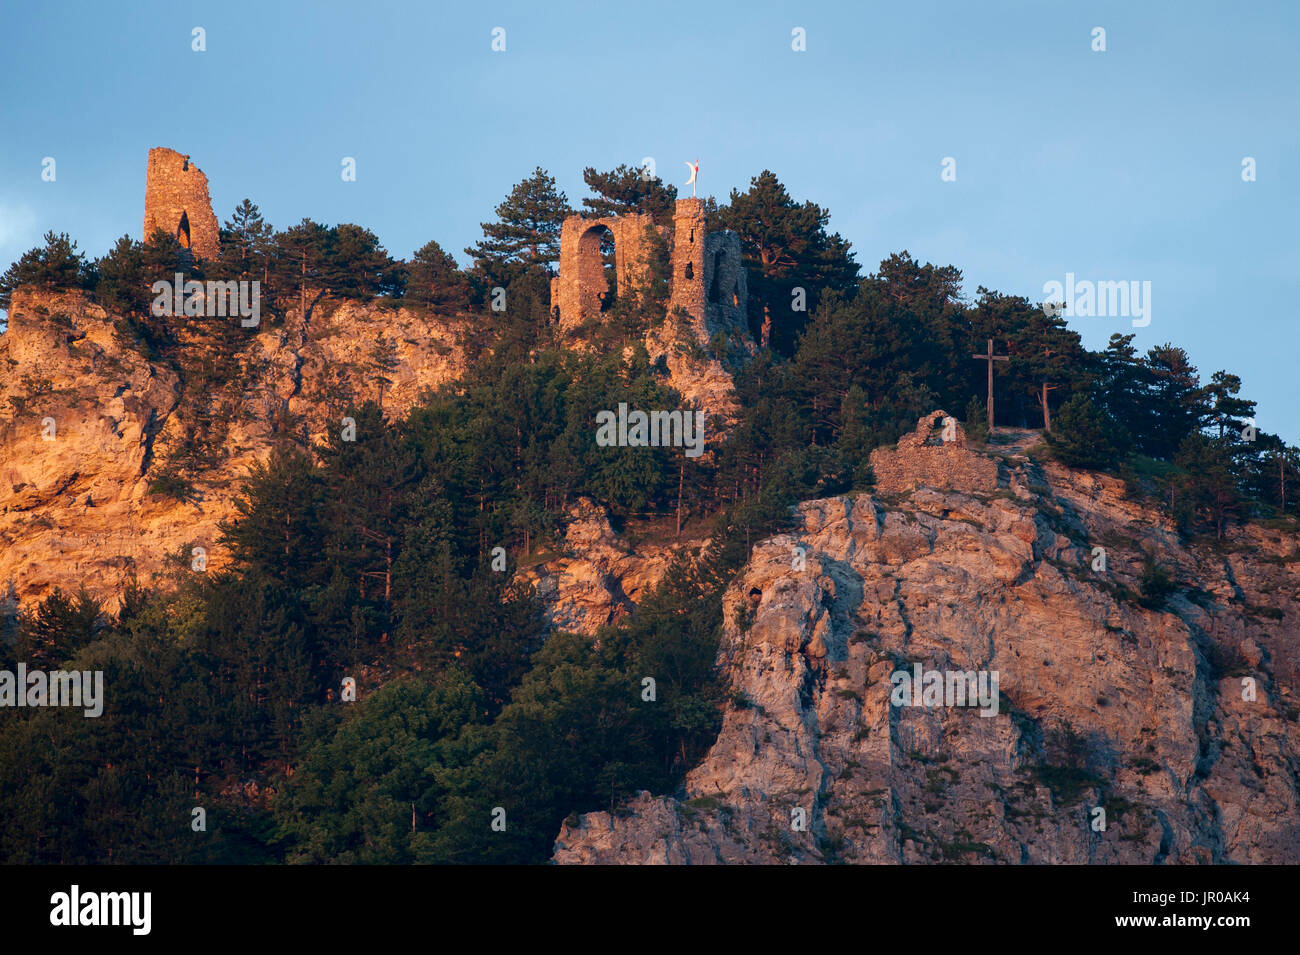 Ruins of a Castle on a Rockface in Nature Park Seebenstein Turkensturz in Gleissenfeld, Austria. 29 July 2016 © Wojciech Strozyk / Alamy Stock Photo Stock Photo